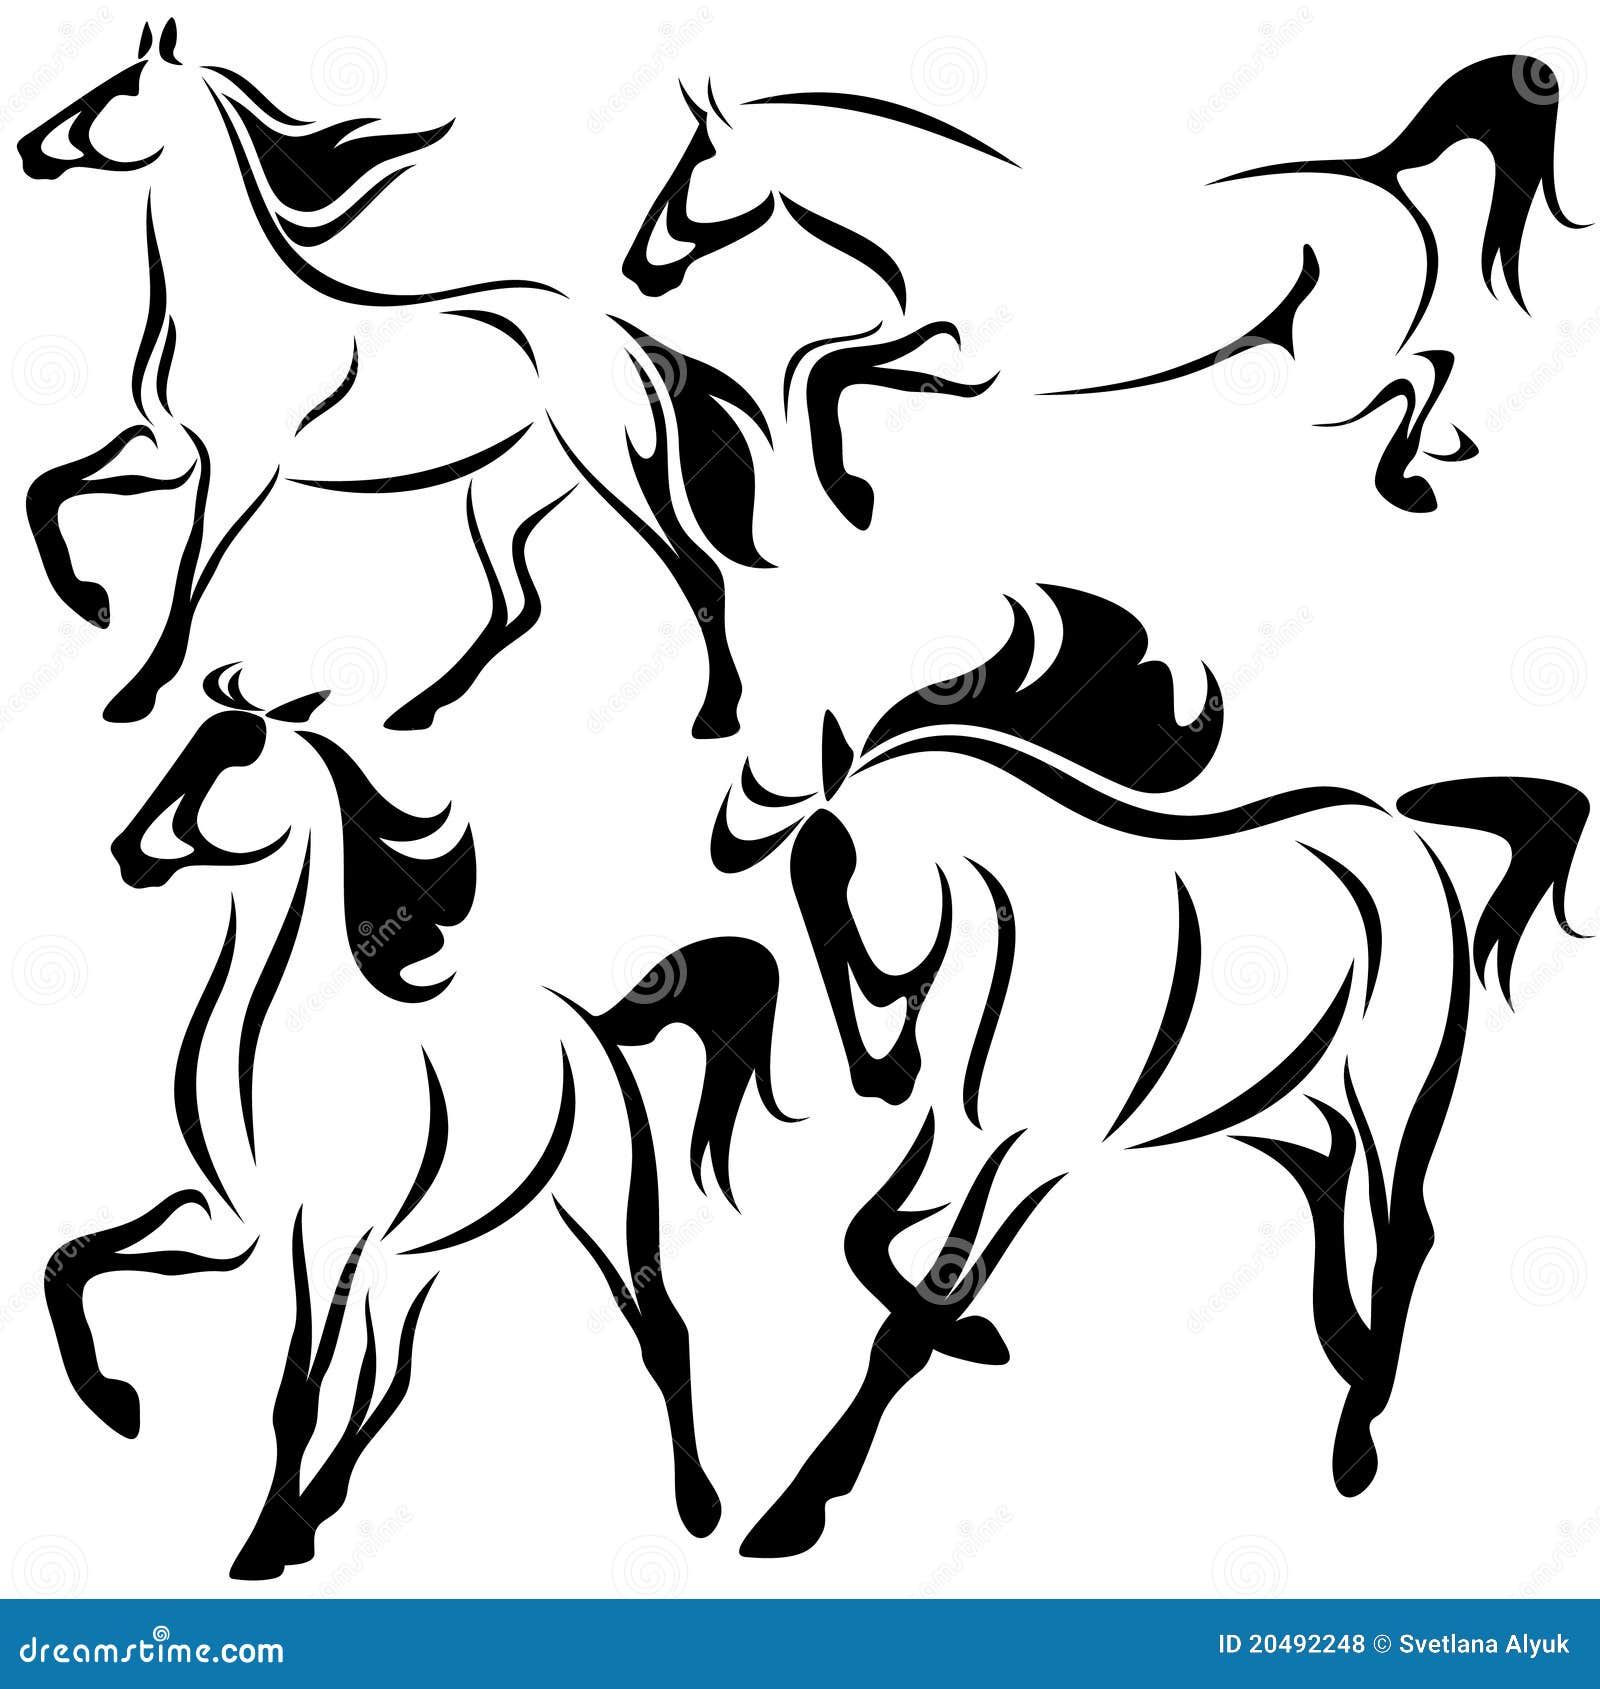 free vector clipart horse - photo #38